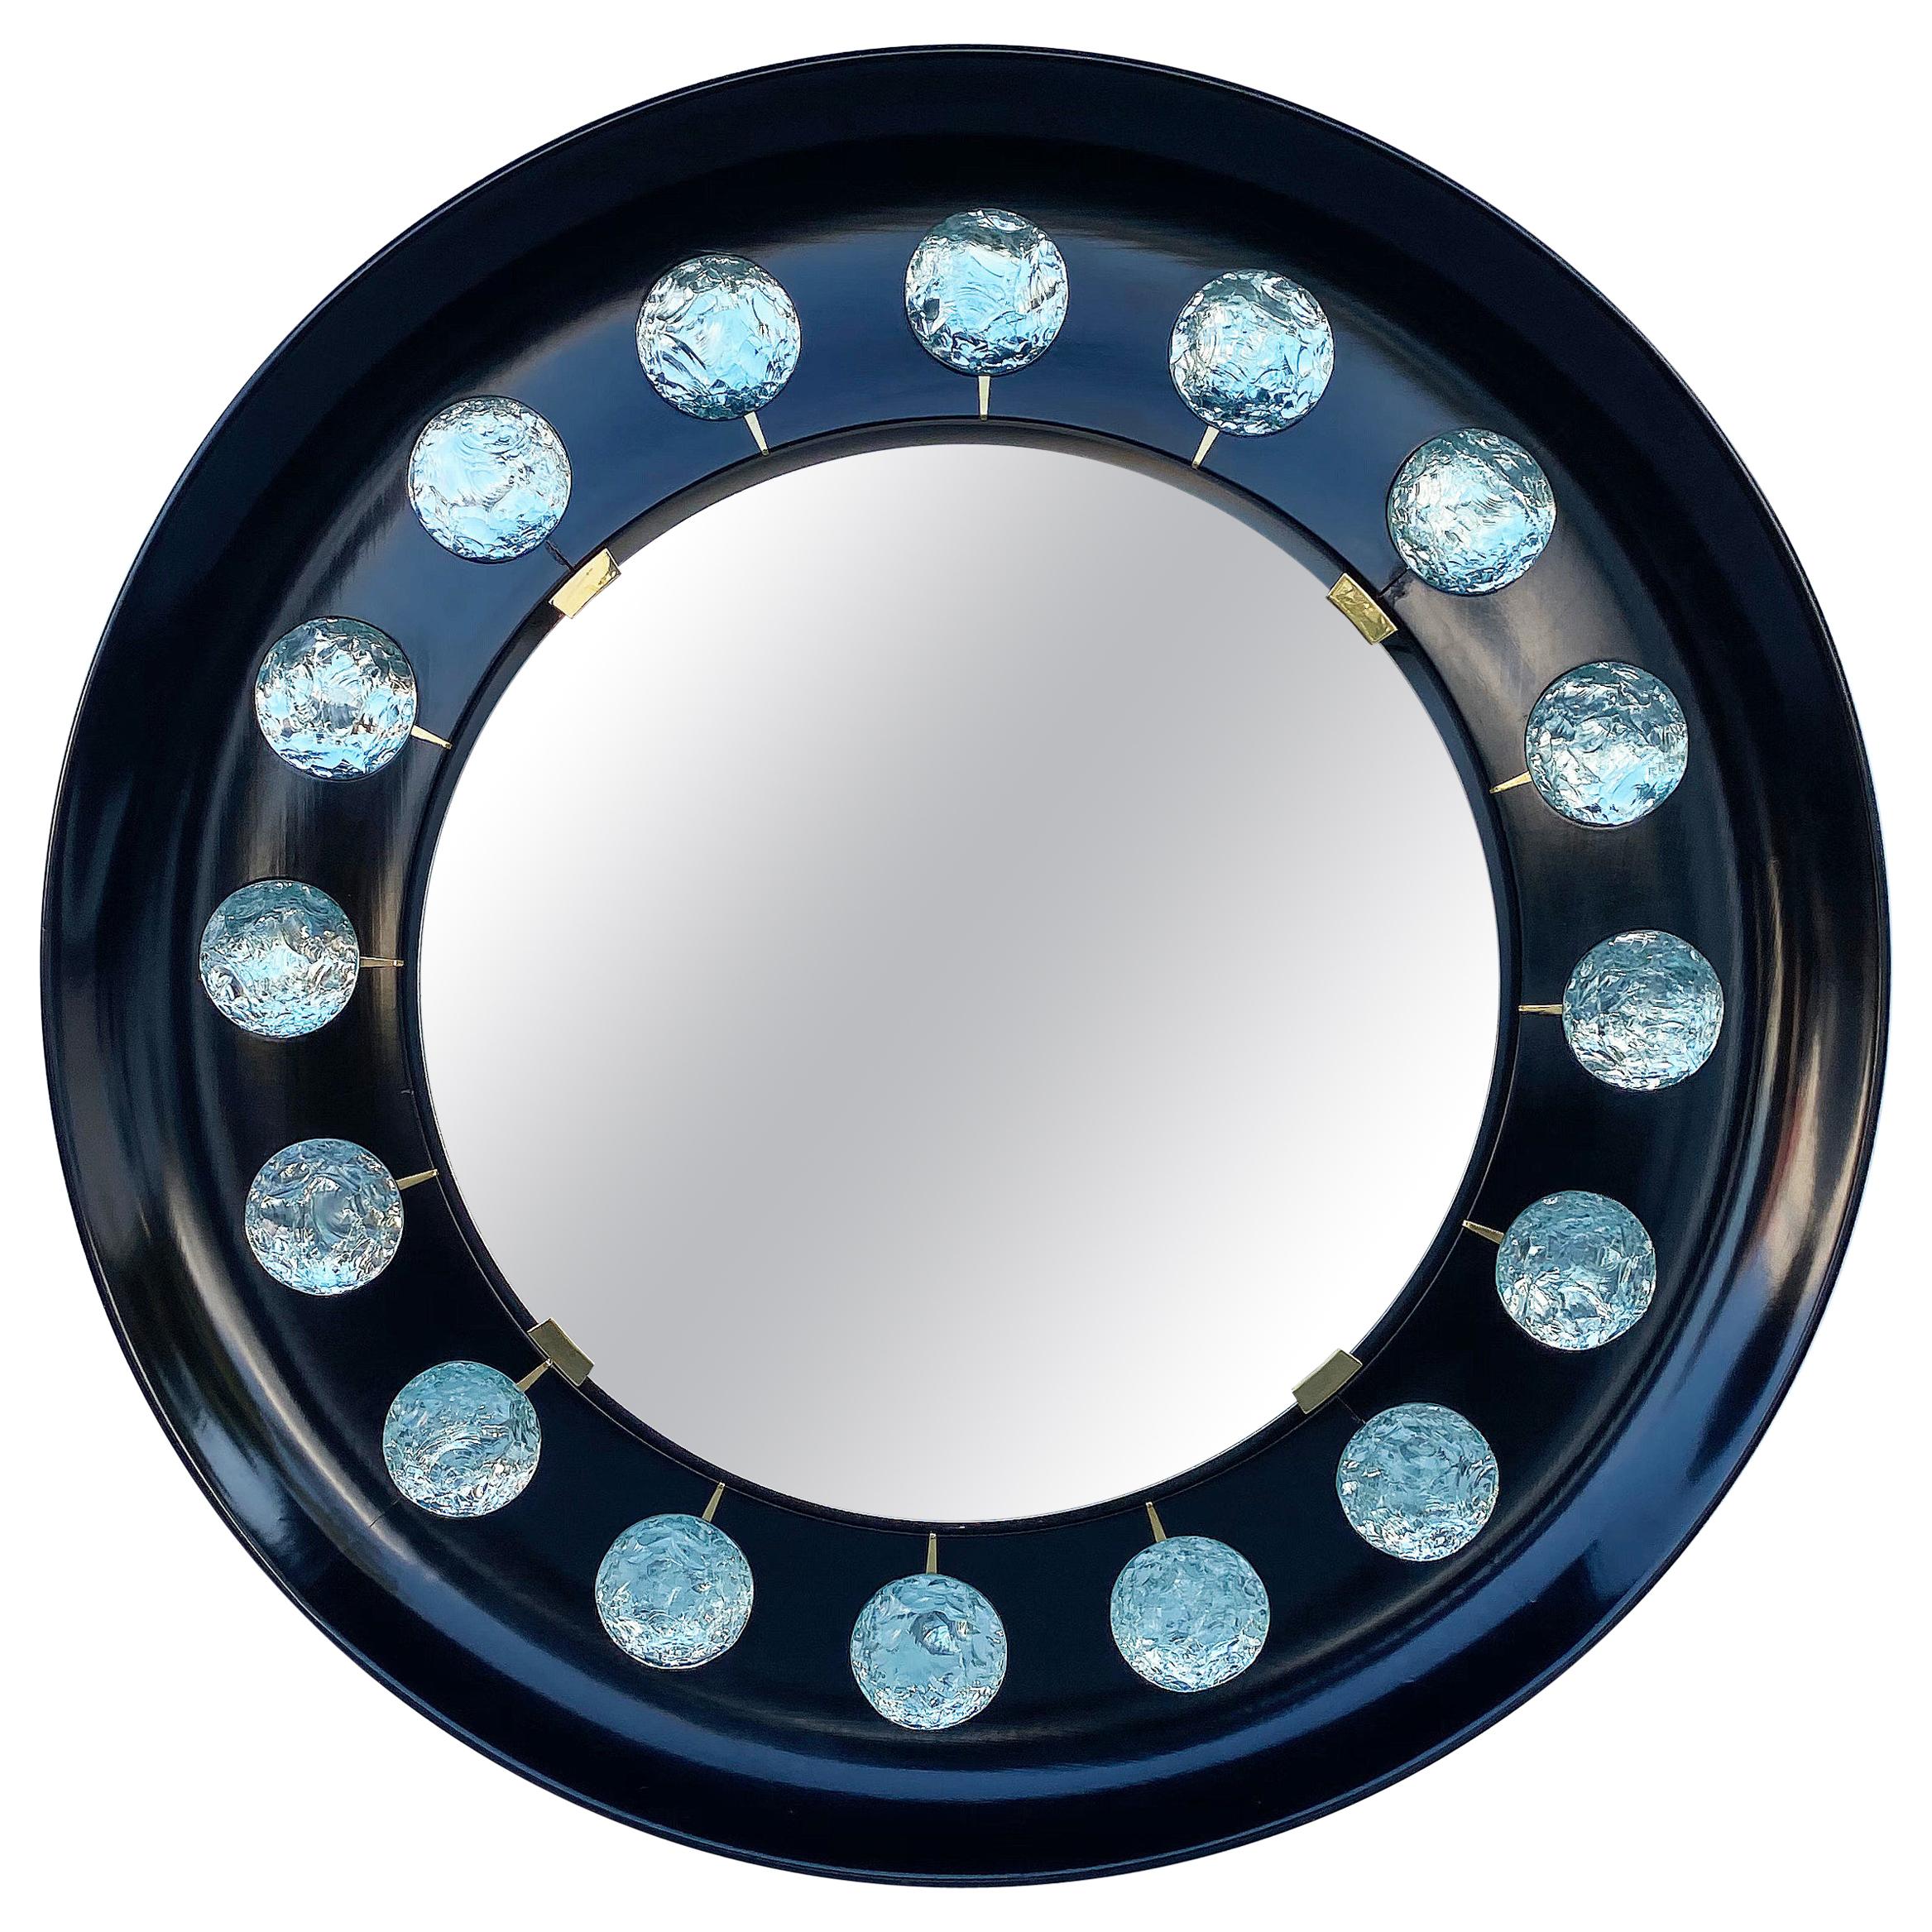 Ghiro Studio 'Italy' Circular Wall Mirror with Art Glass Embellishments